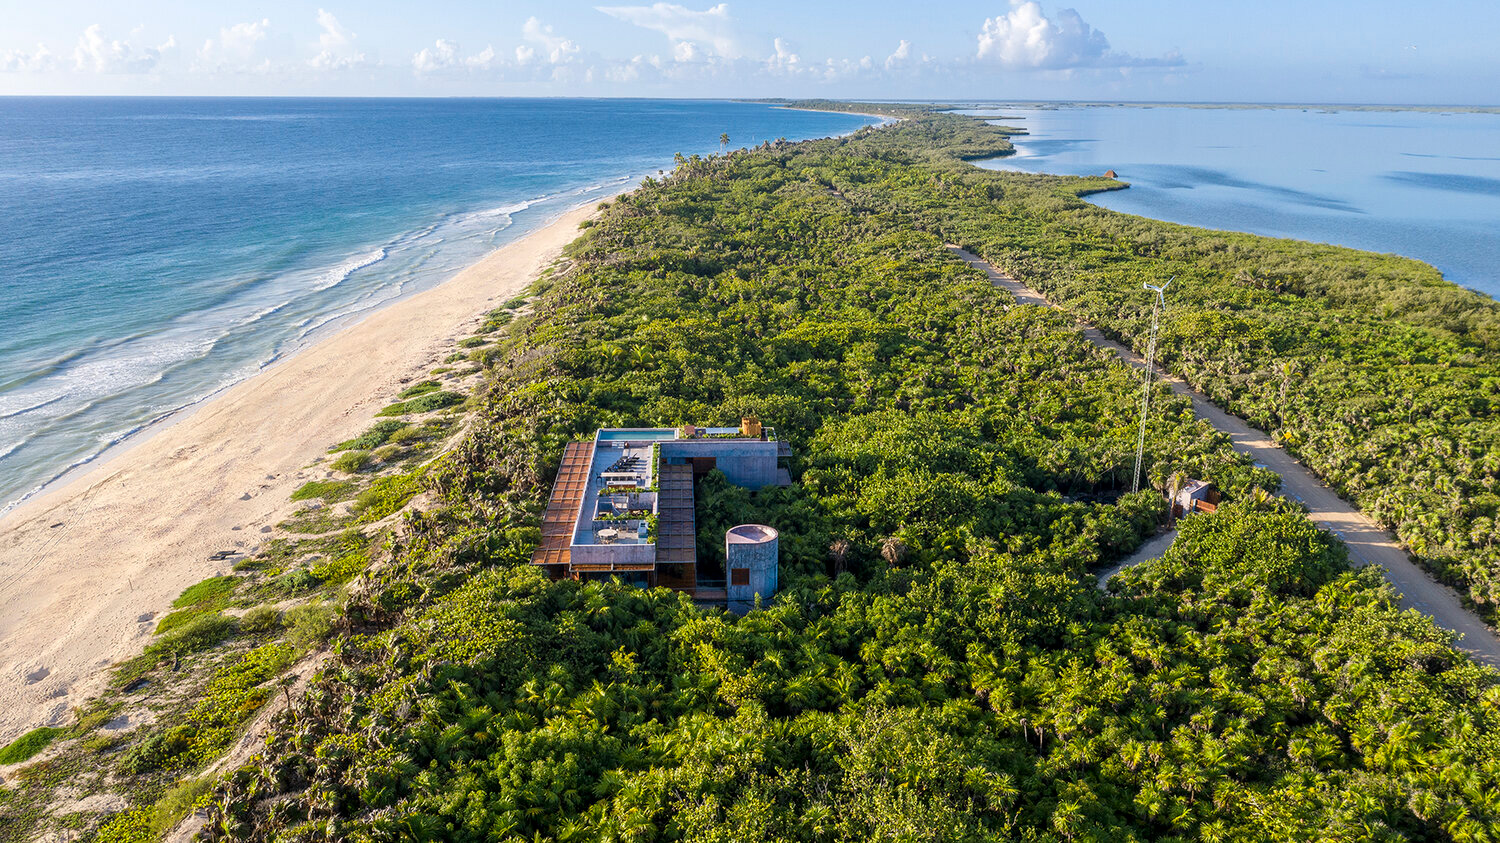 Casa Bautista - a jungle hideaway in Yucatan’s Sian Ka’an Biosphere Reserve